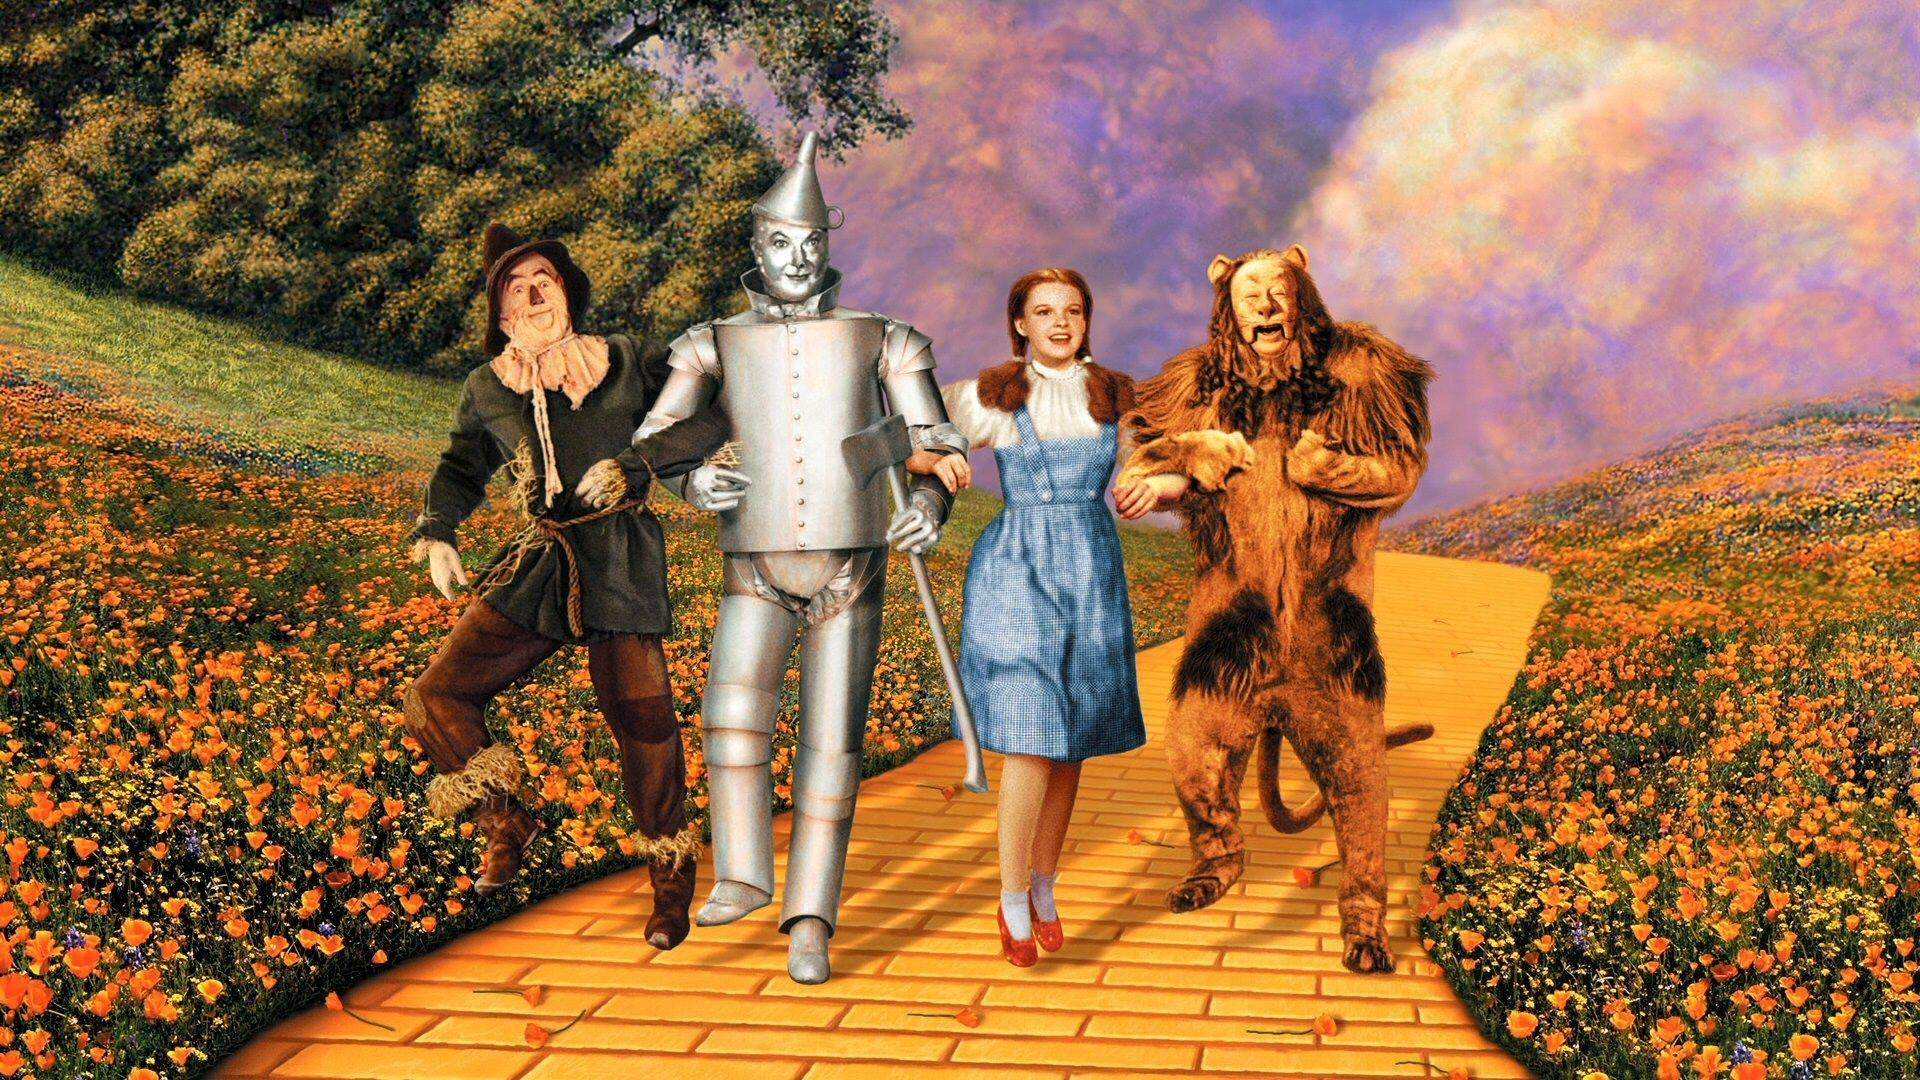 Wizard Of Oz Wallpaper 17916 1920x1080 px